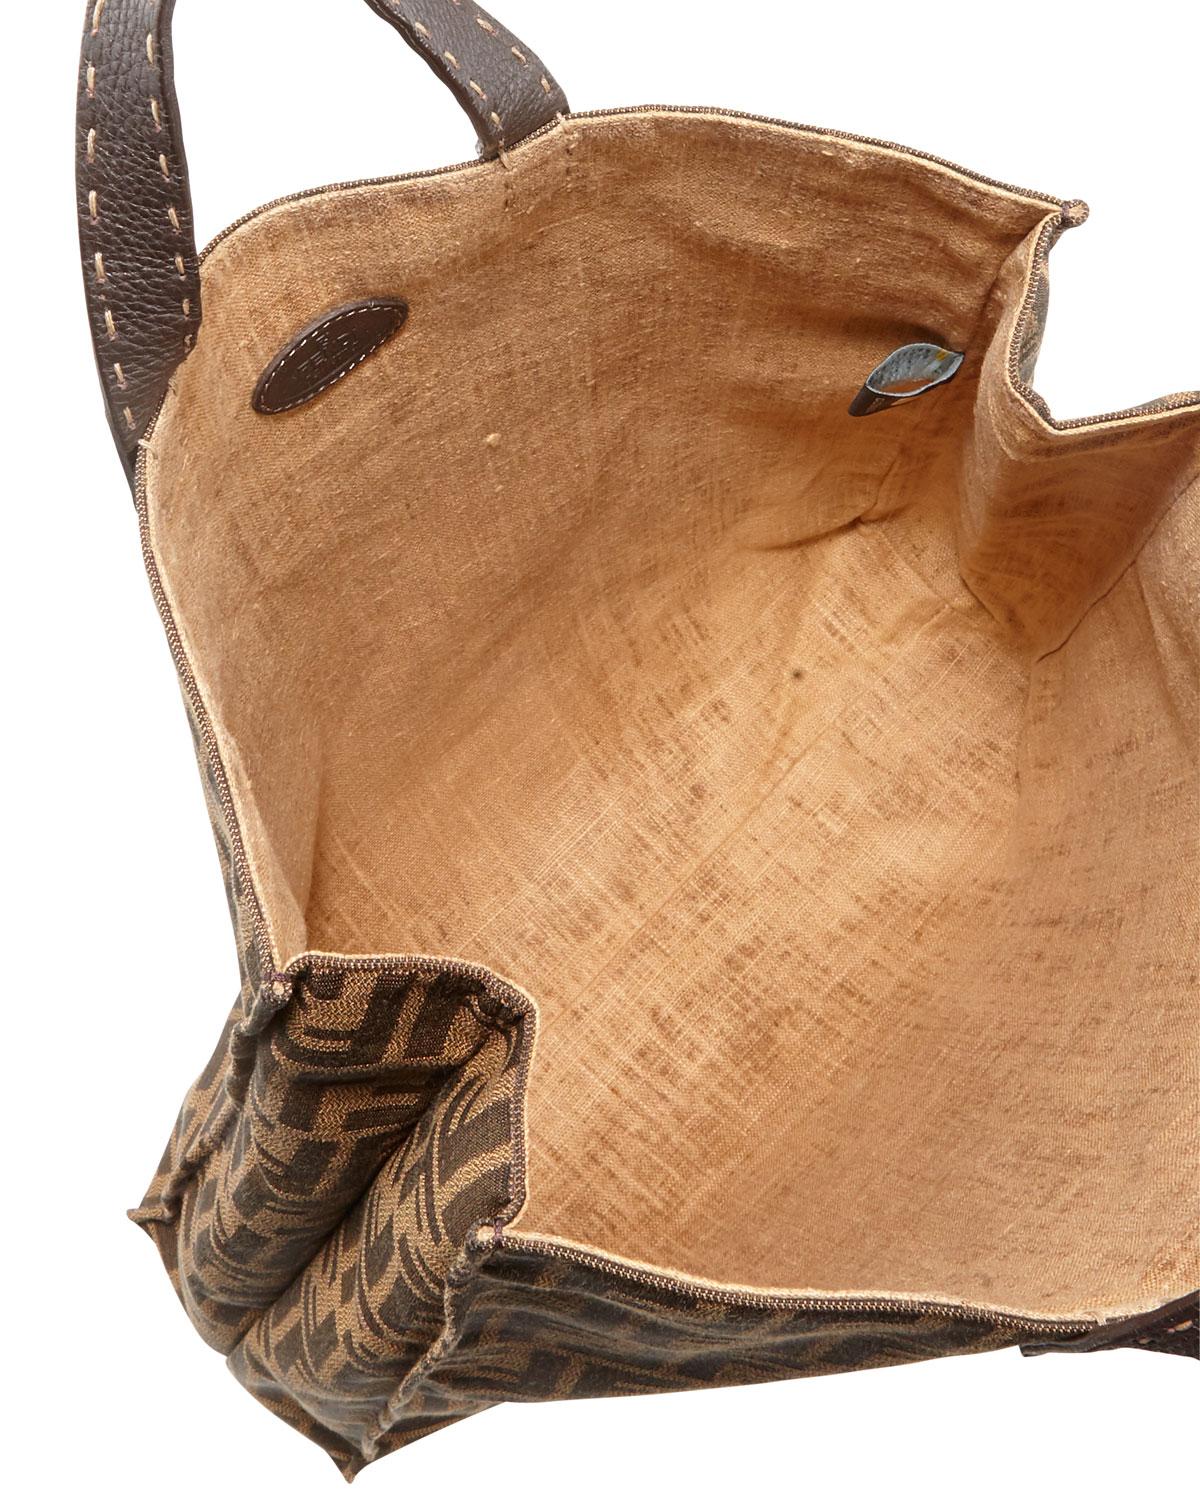 Fendi Canvas Zucca Top Handle Tote Bag in Brown - Lyst